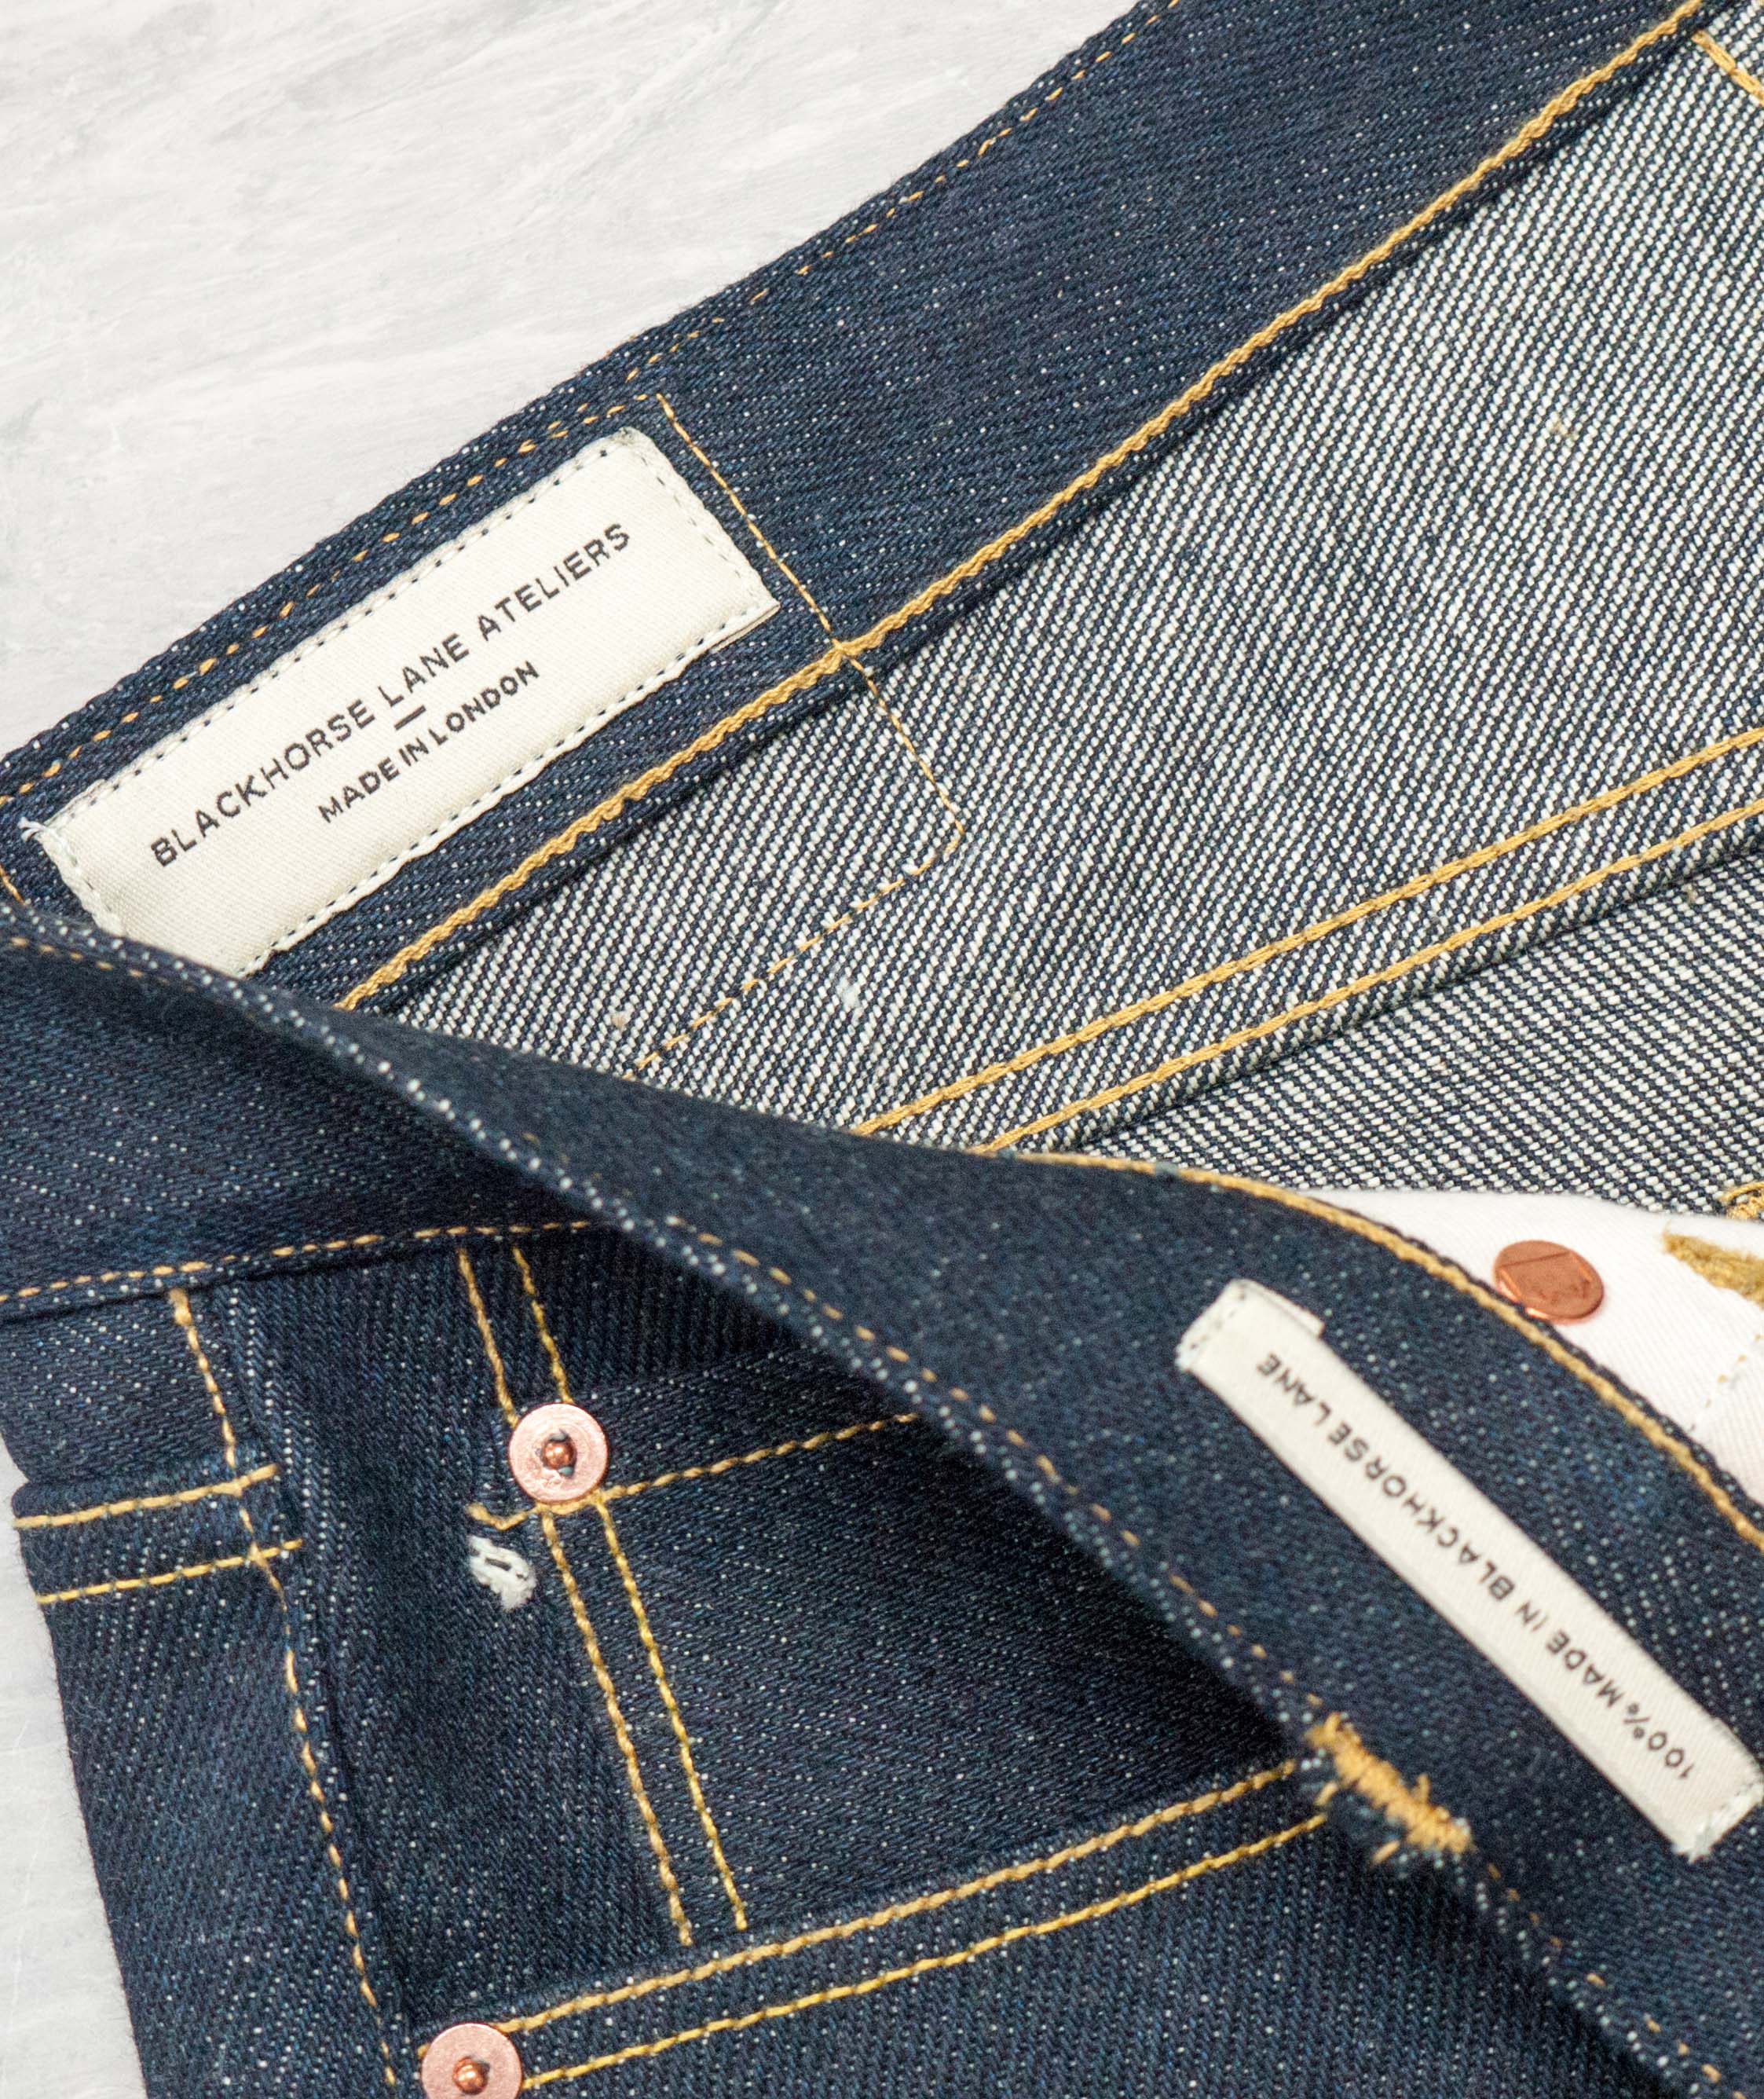 Verdict: The Most Durable Jeans Brand 